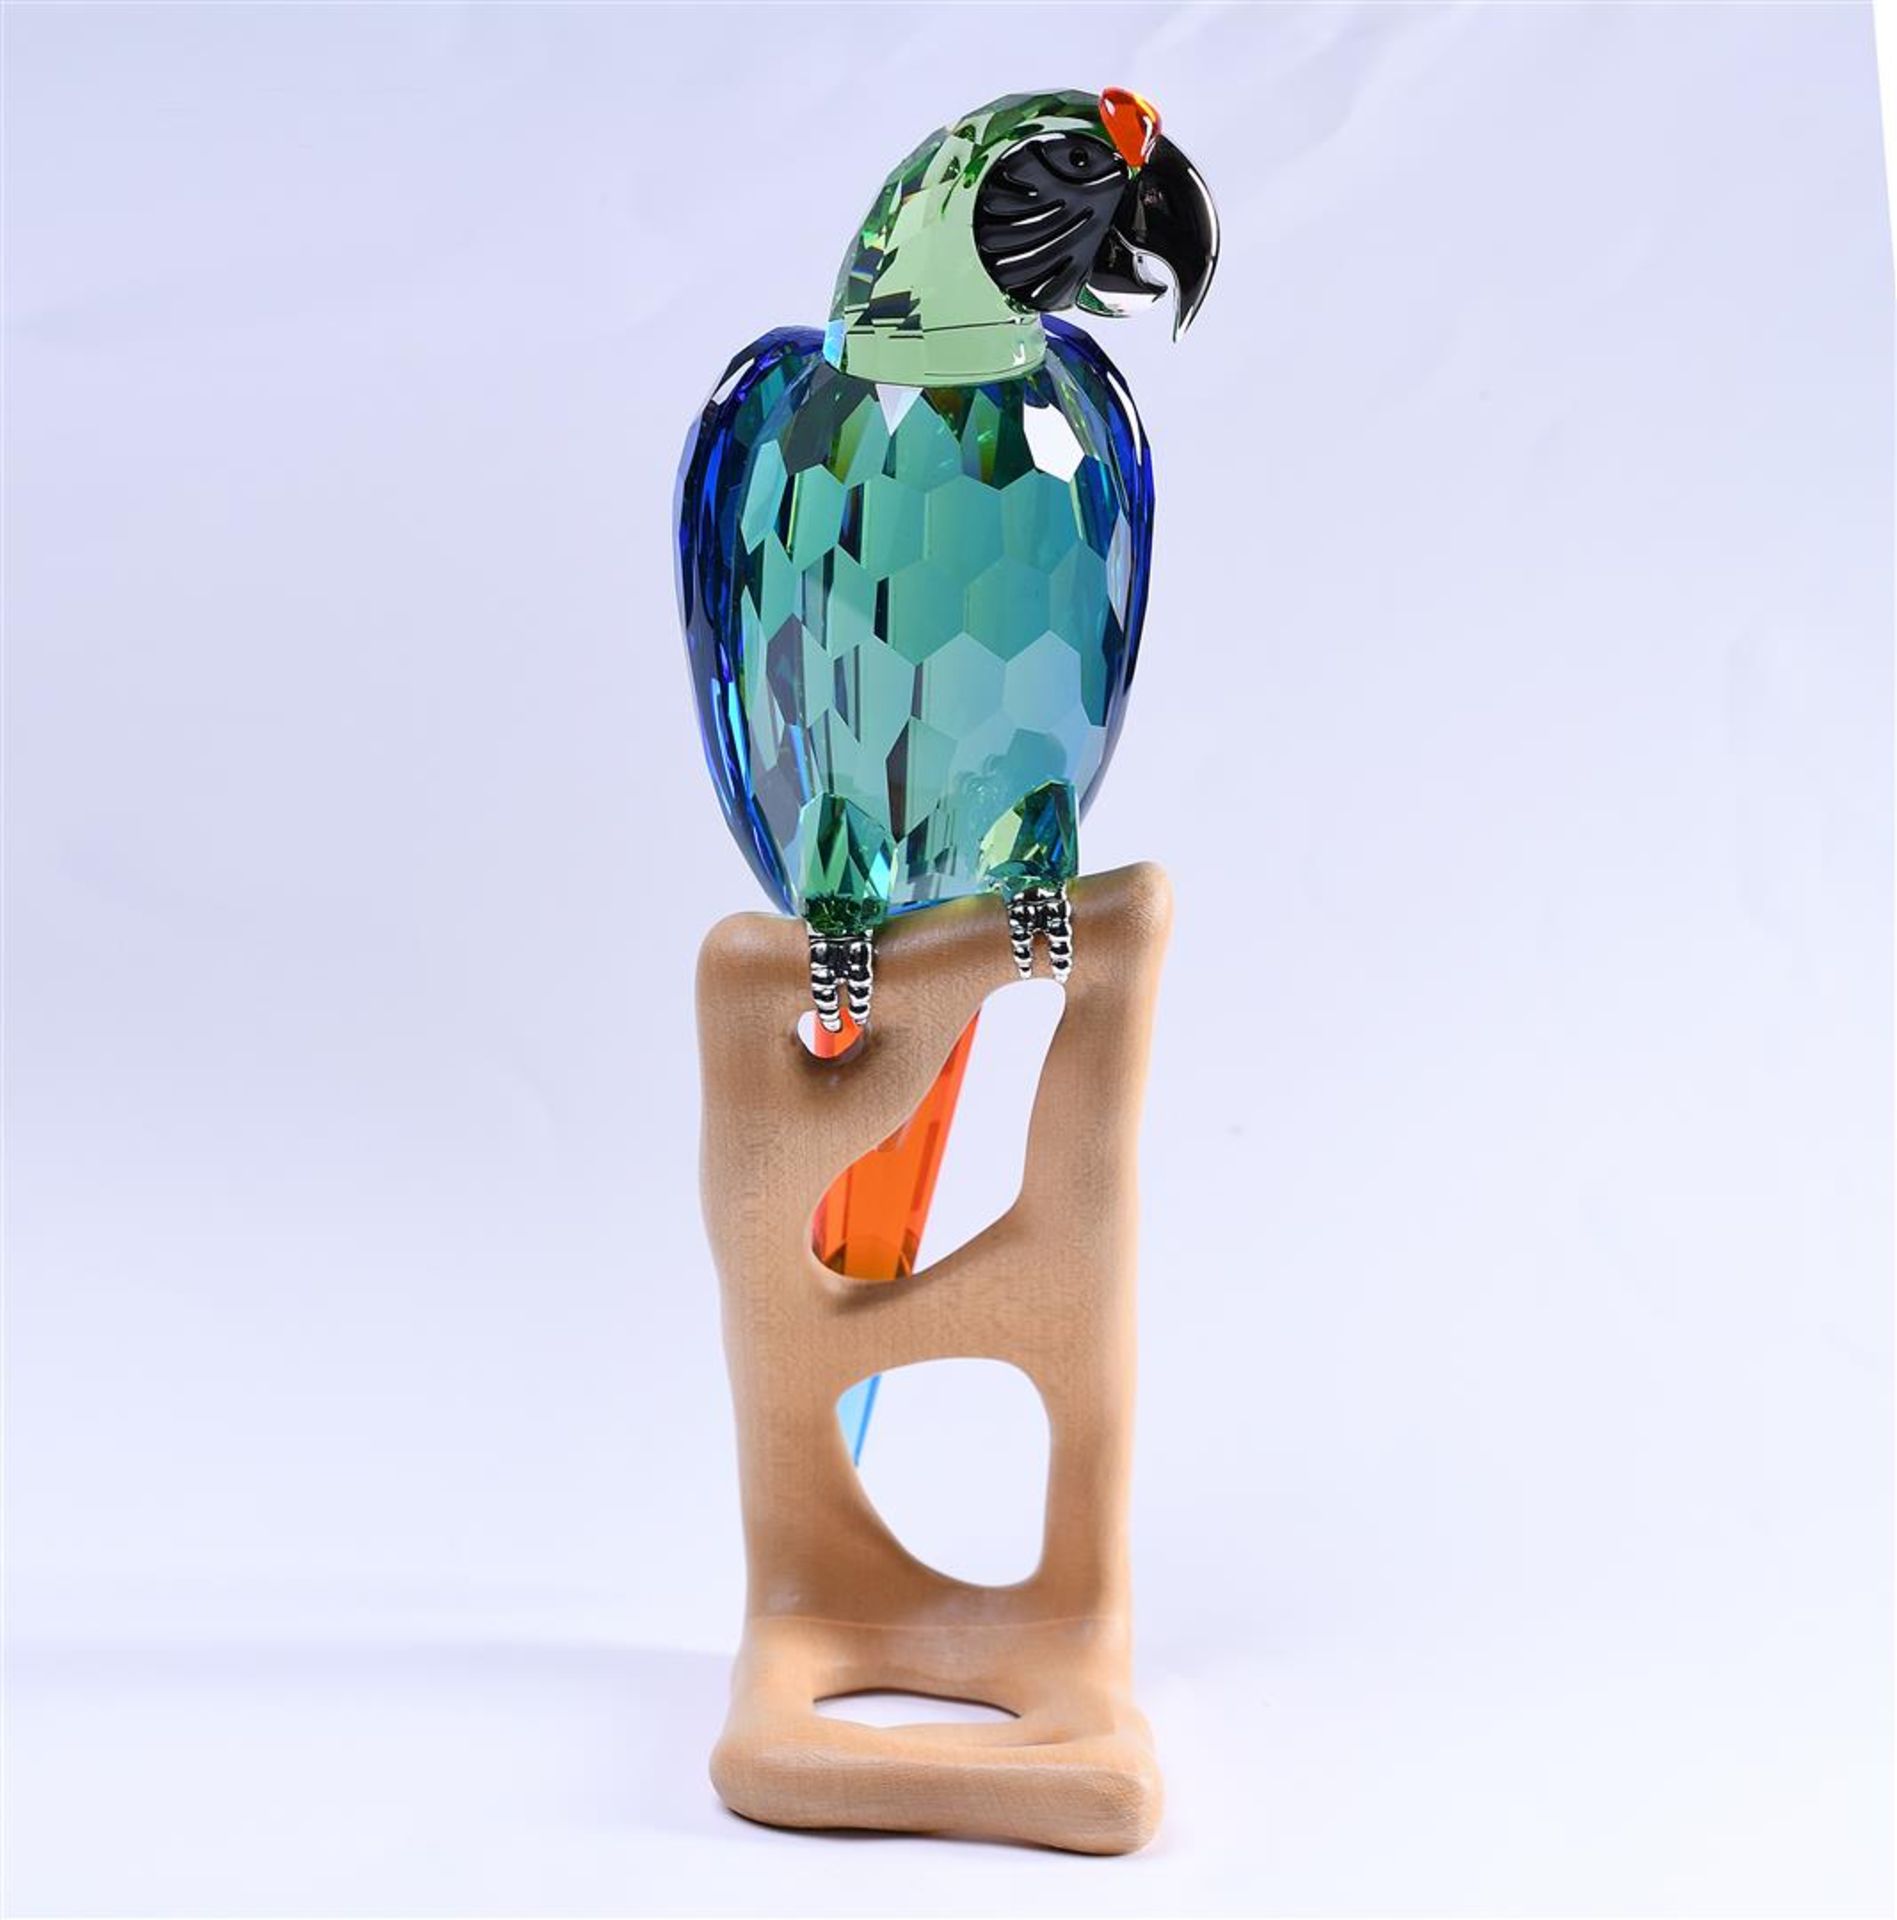 Swarovski, Macaw paradise bird, Year of issue 2005, 685824. Includes original box.
H. 24 cm. - Image 4 of 7